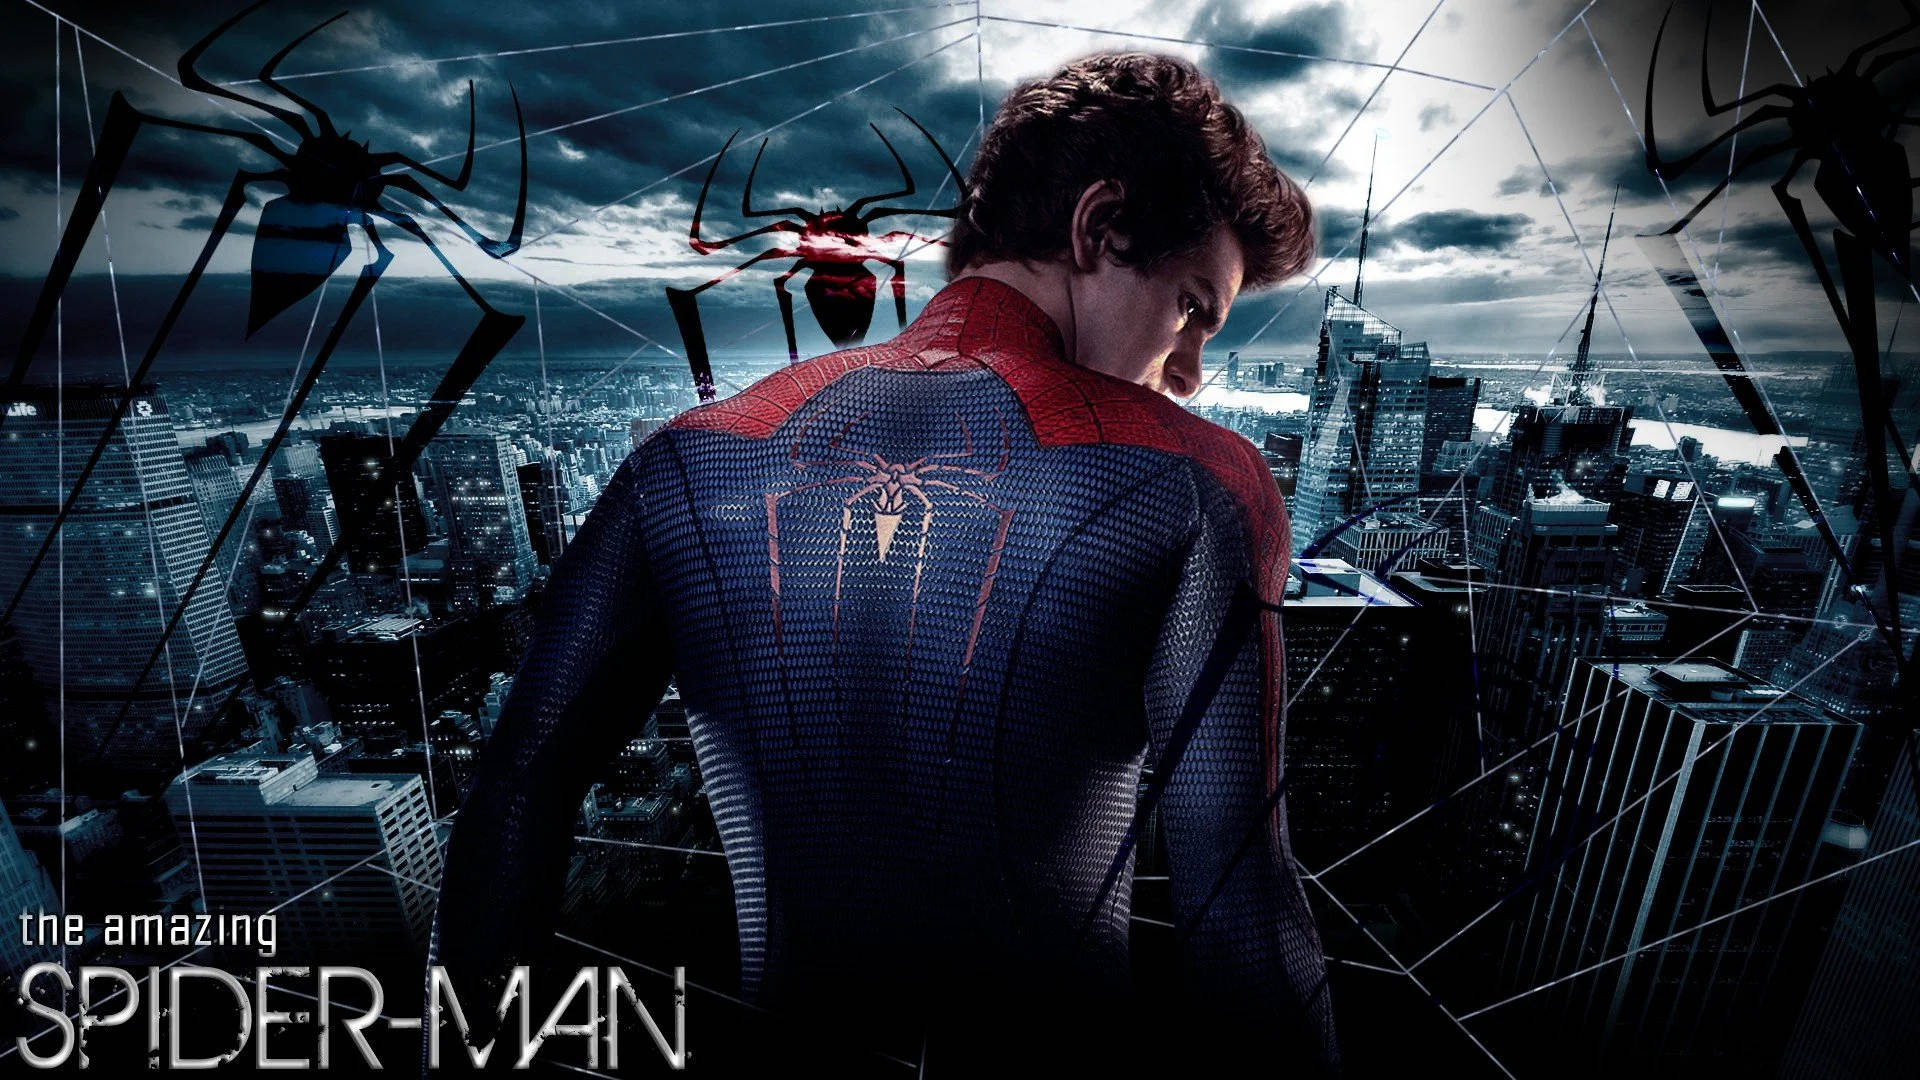 Spider-man Andrew Garfield Back Pose